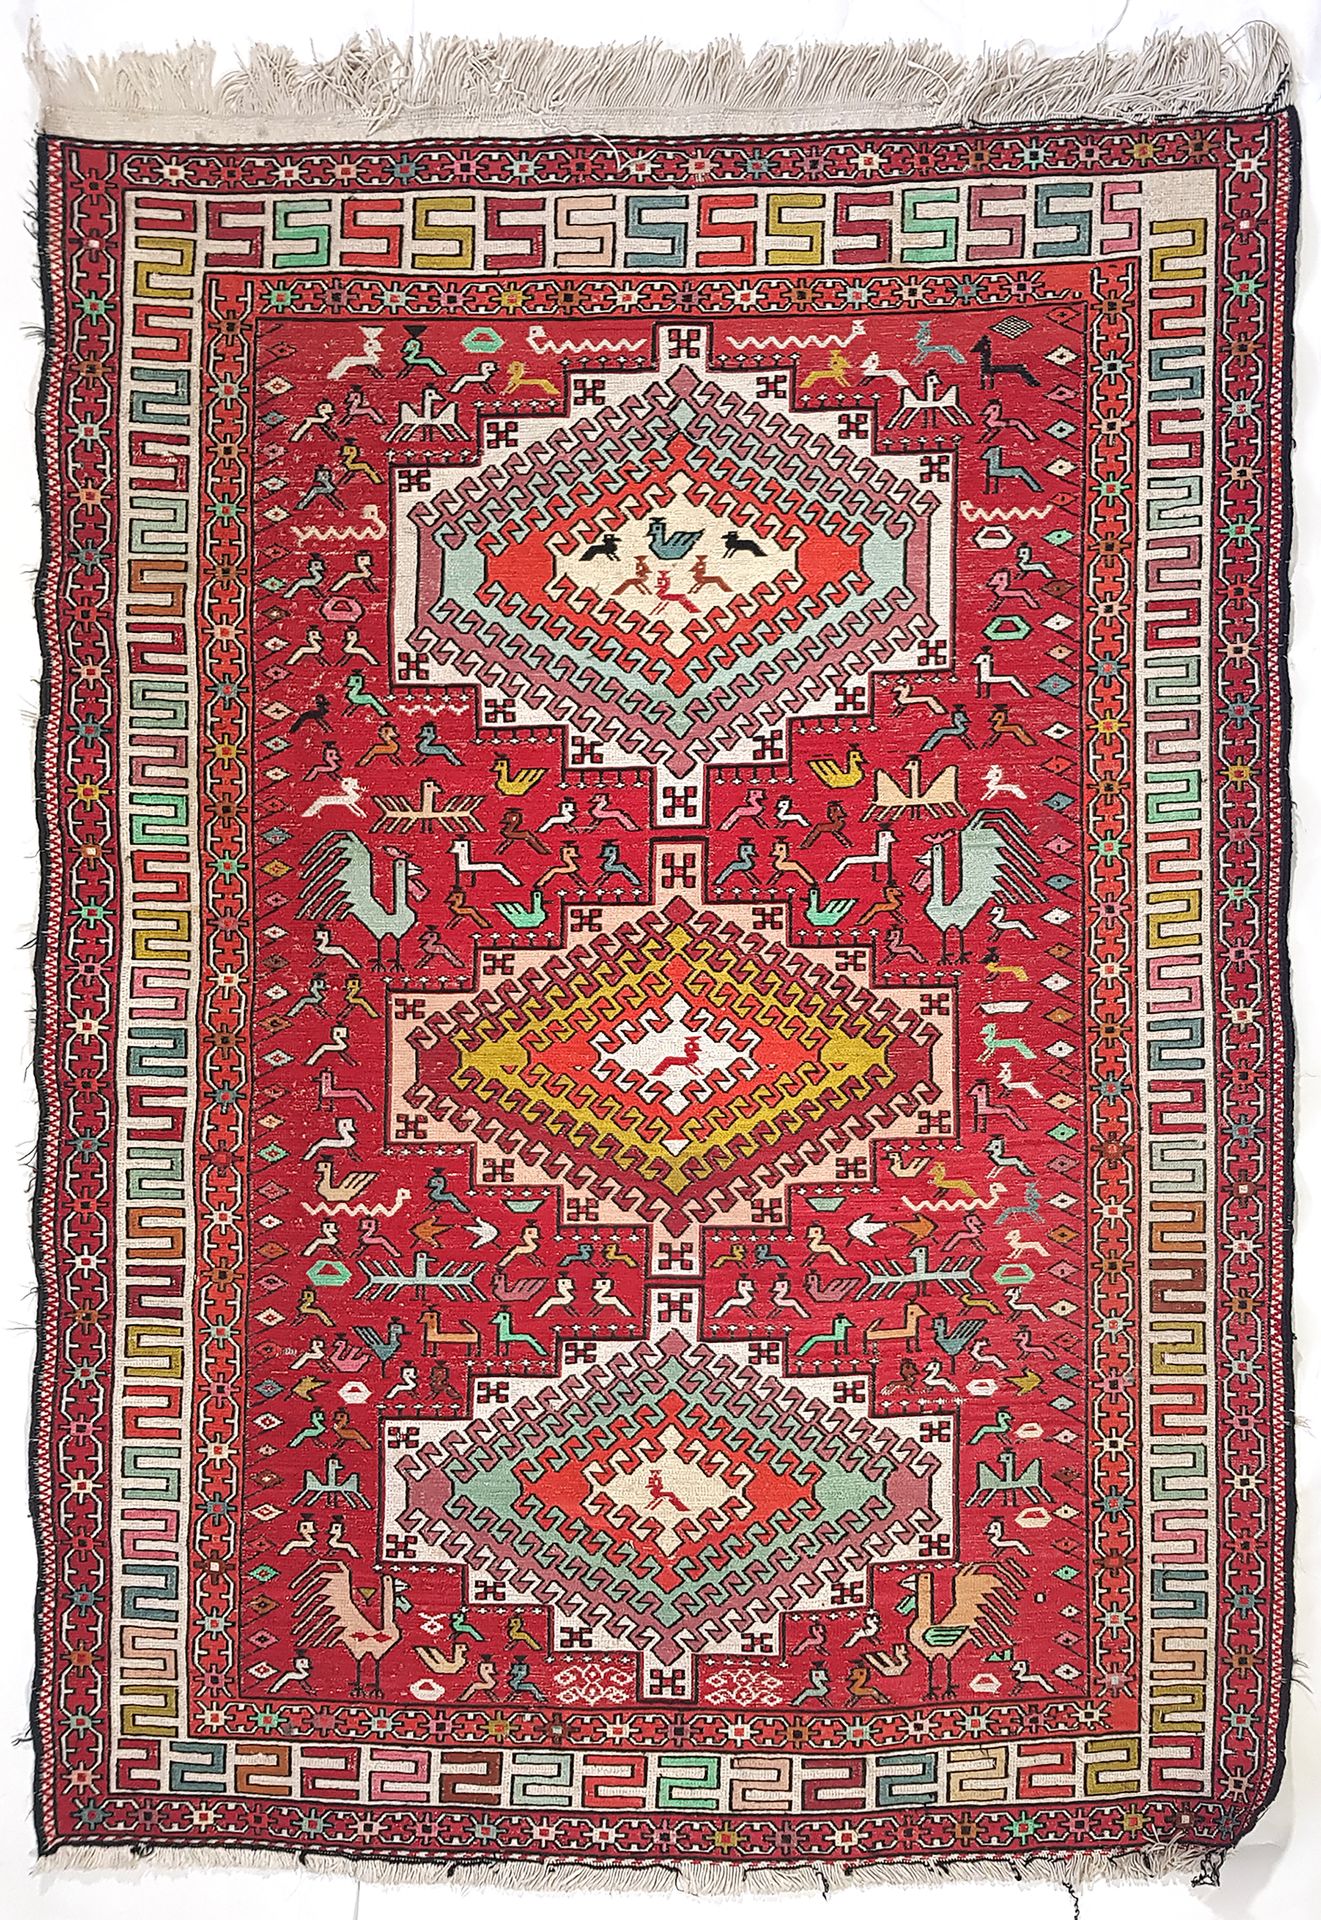 Null 丝绸苏玛克地毯 - 伊朗，约1980年

尺寸：141 x 97 cm

技术特点：针法，挂毯技术，丝基上的丝线

总体状况良好

红宝石领域的动物装&hellip;